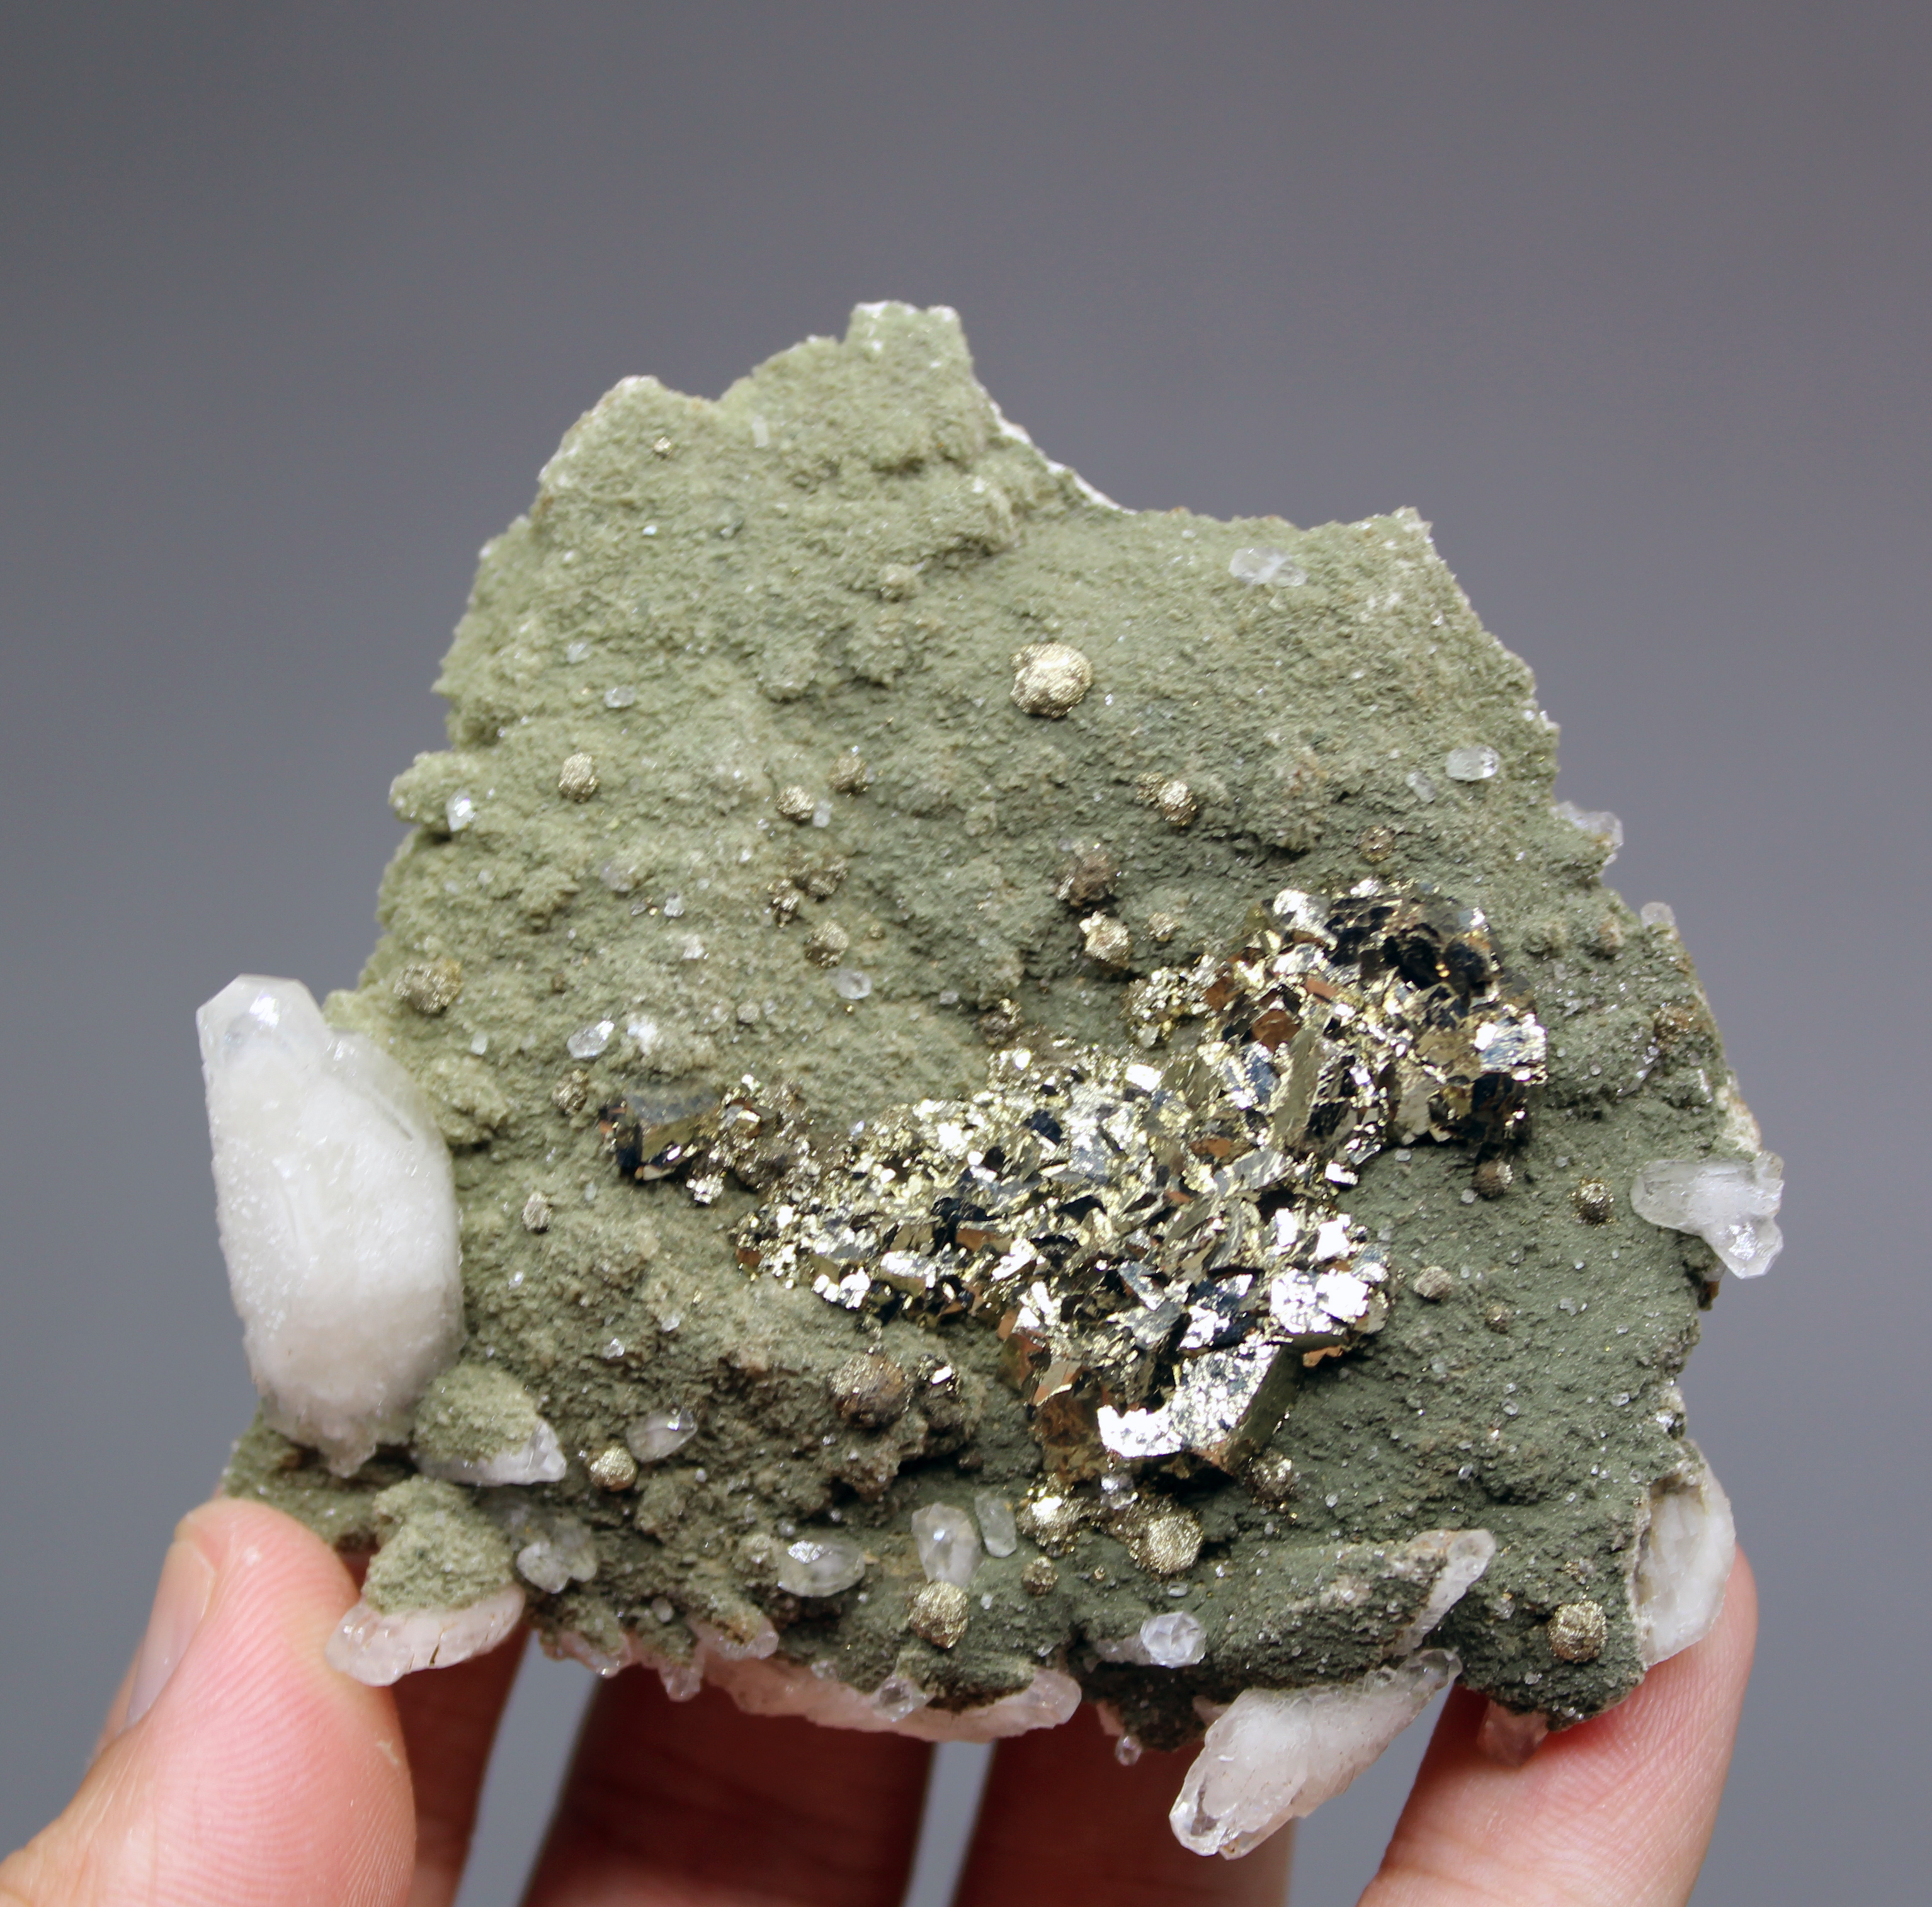 176g Natural rare pyrite, dolomite and calcite symbiotic mineral specimens stones and crystals healing crystals quartz